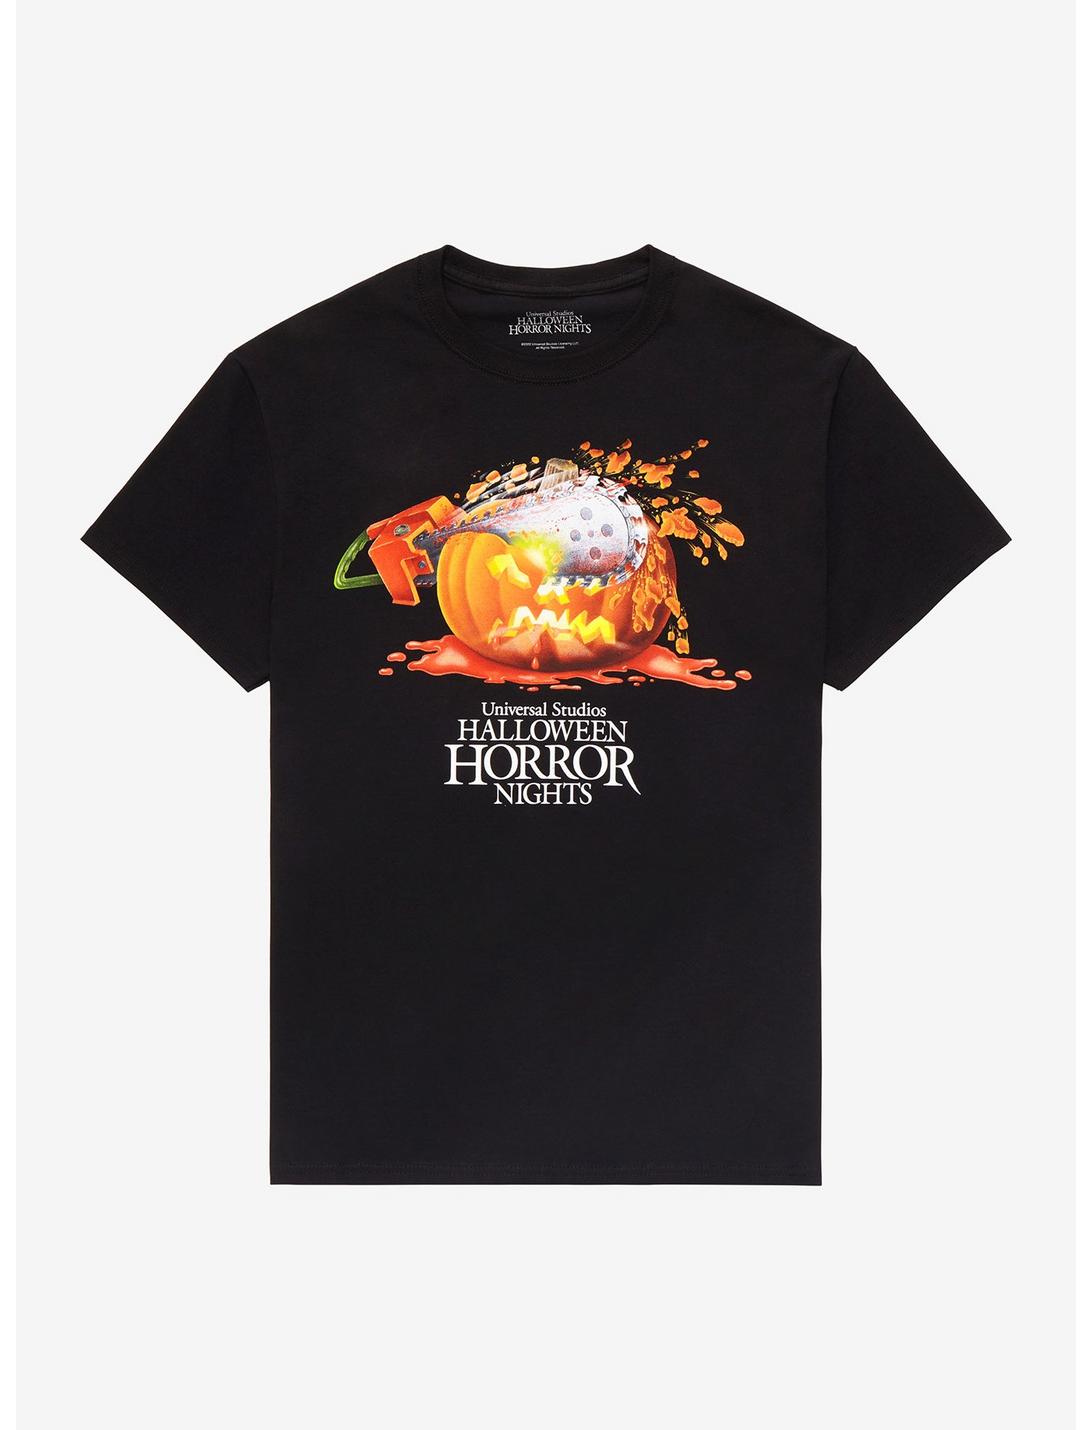 Universal Studios Halloween Horror Nights Chainsaw Jack-O'-Lantern T-Shirt, BLACK, hi-res